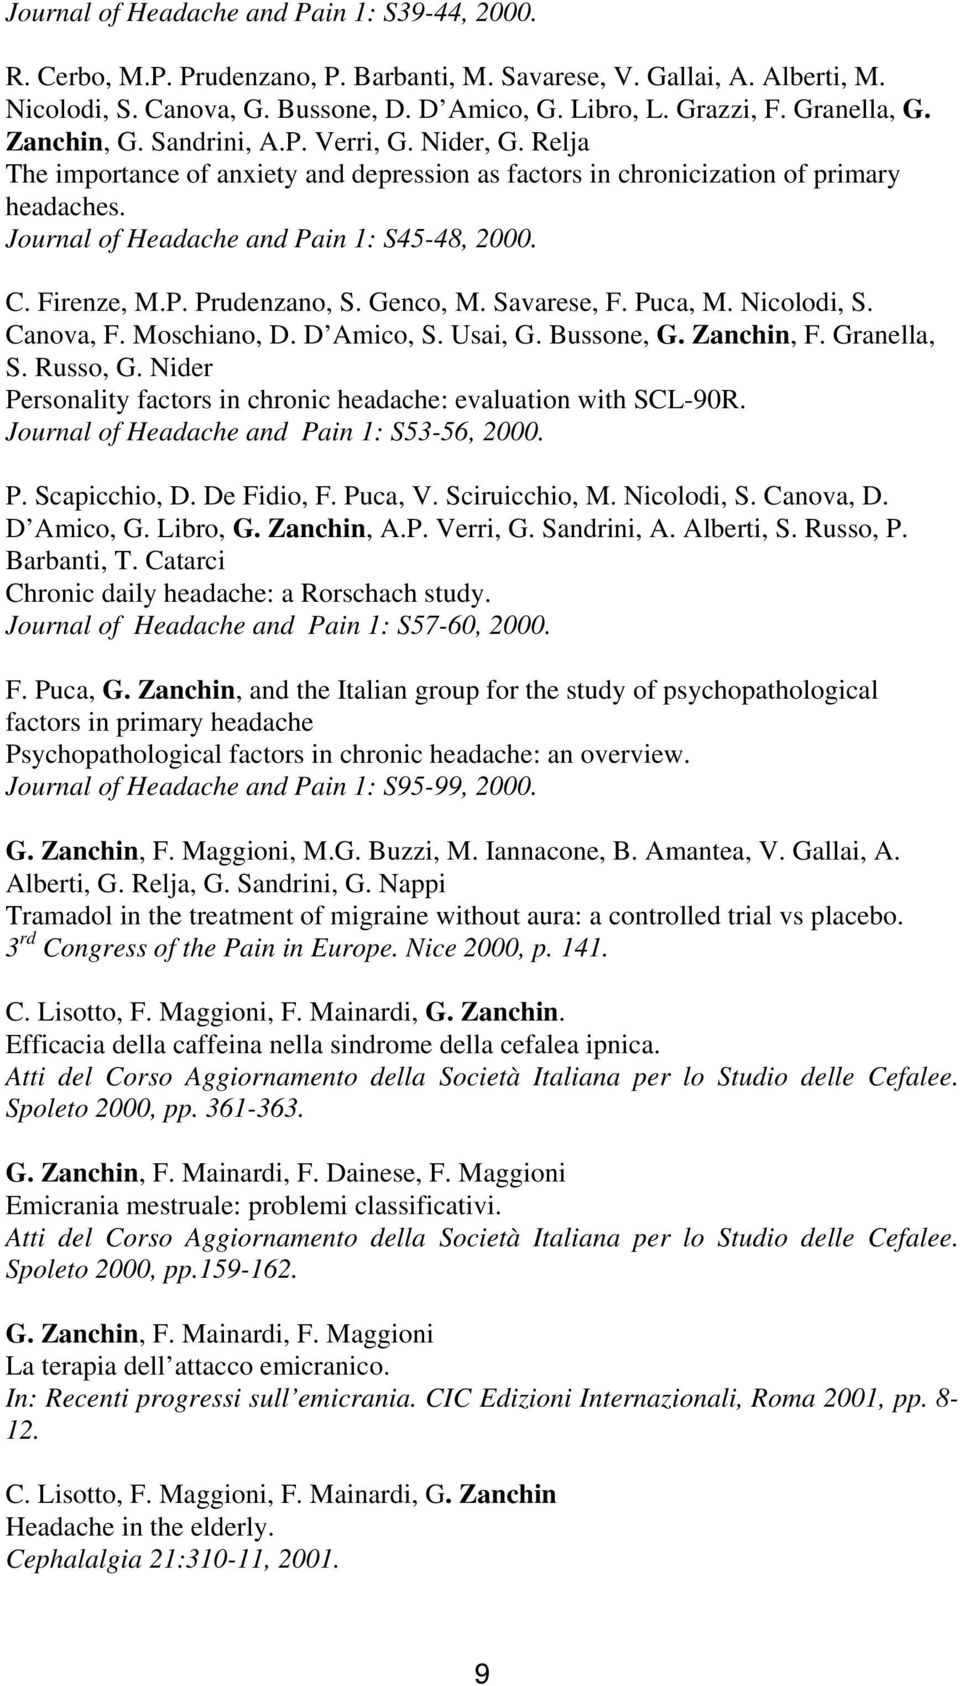 Journal of Headache and Pain 1: S45-48, 2000. C. Firenze, M.P. Prudenzano, S. Genco, M. Savarese, F. Puca, M. Nicolodi, S. Canova, F. Moschiano, D. D Amico, S. Usai, G. Bussone, G. Zanchin, F.